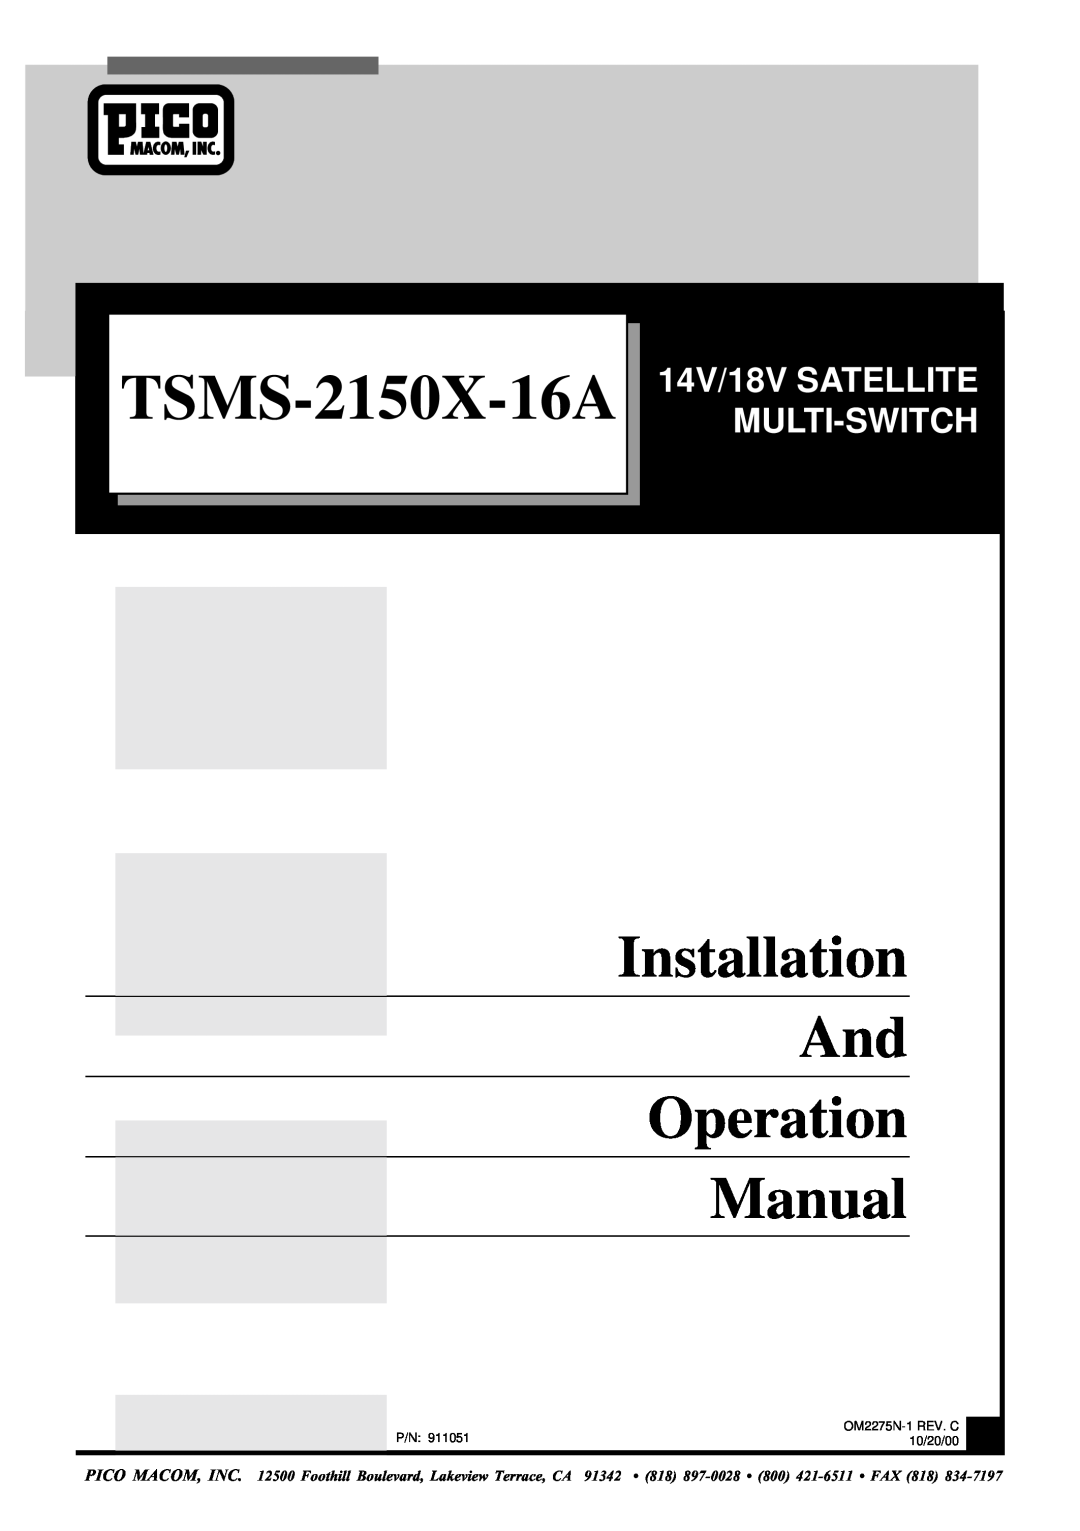 Pico Macom TSMS-16A operation manual TSMS-2150X-16A, Installation And Operation Manual, 14V/18V SATELLITE MULTI-SWITCH 